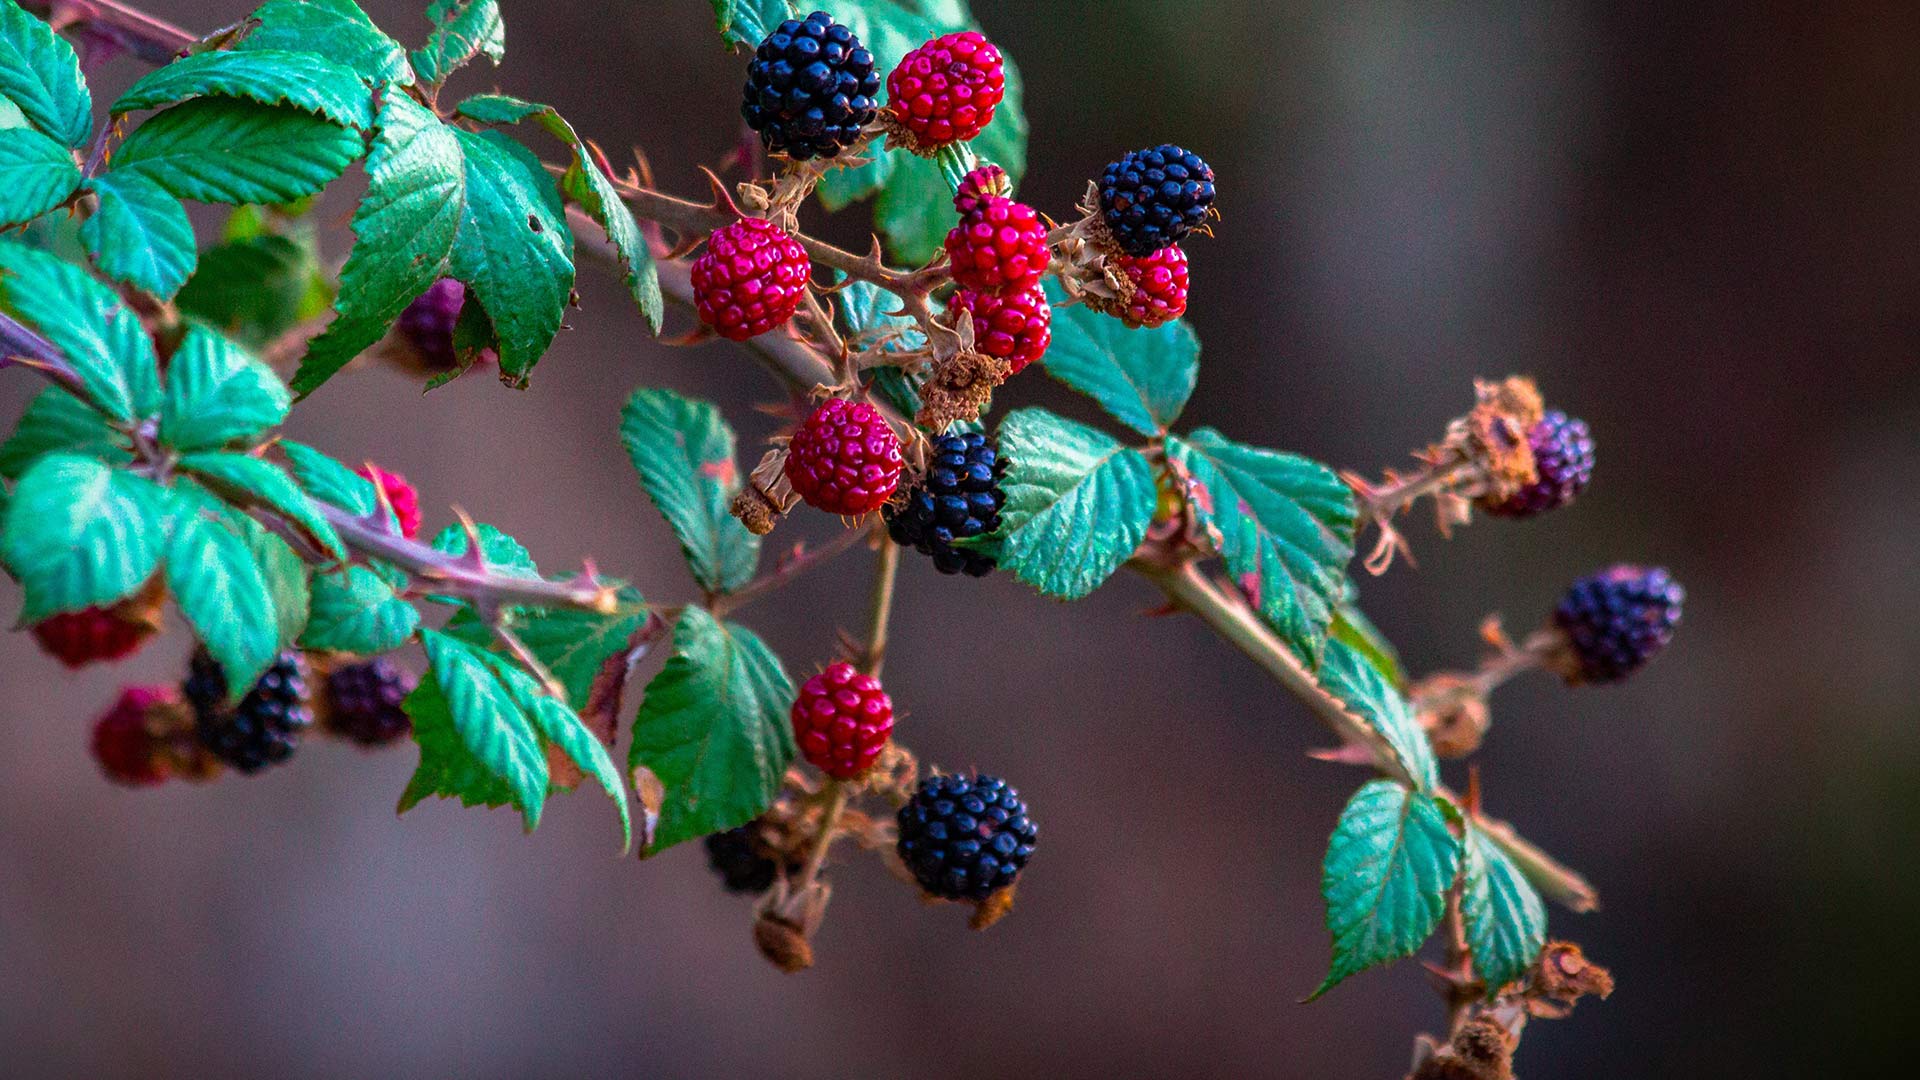 EU research programme to increase shelf-life of berries